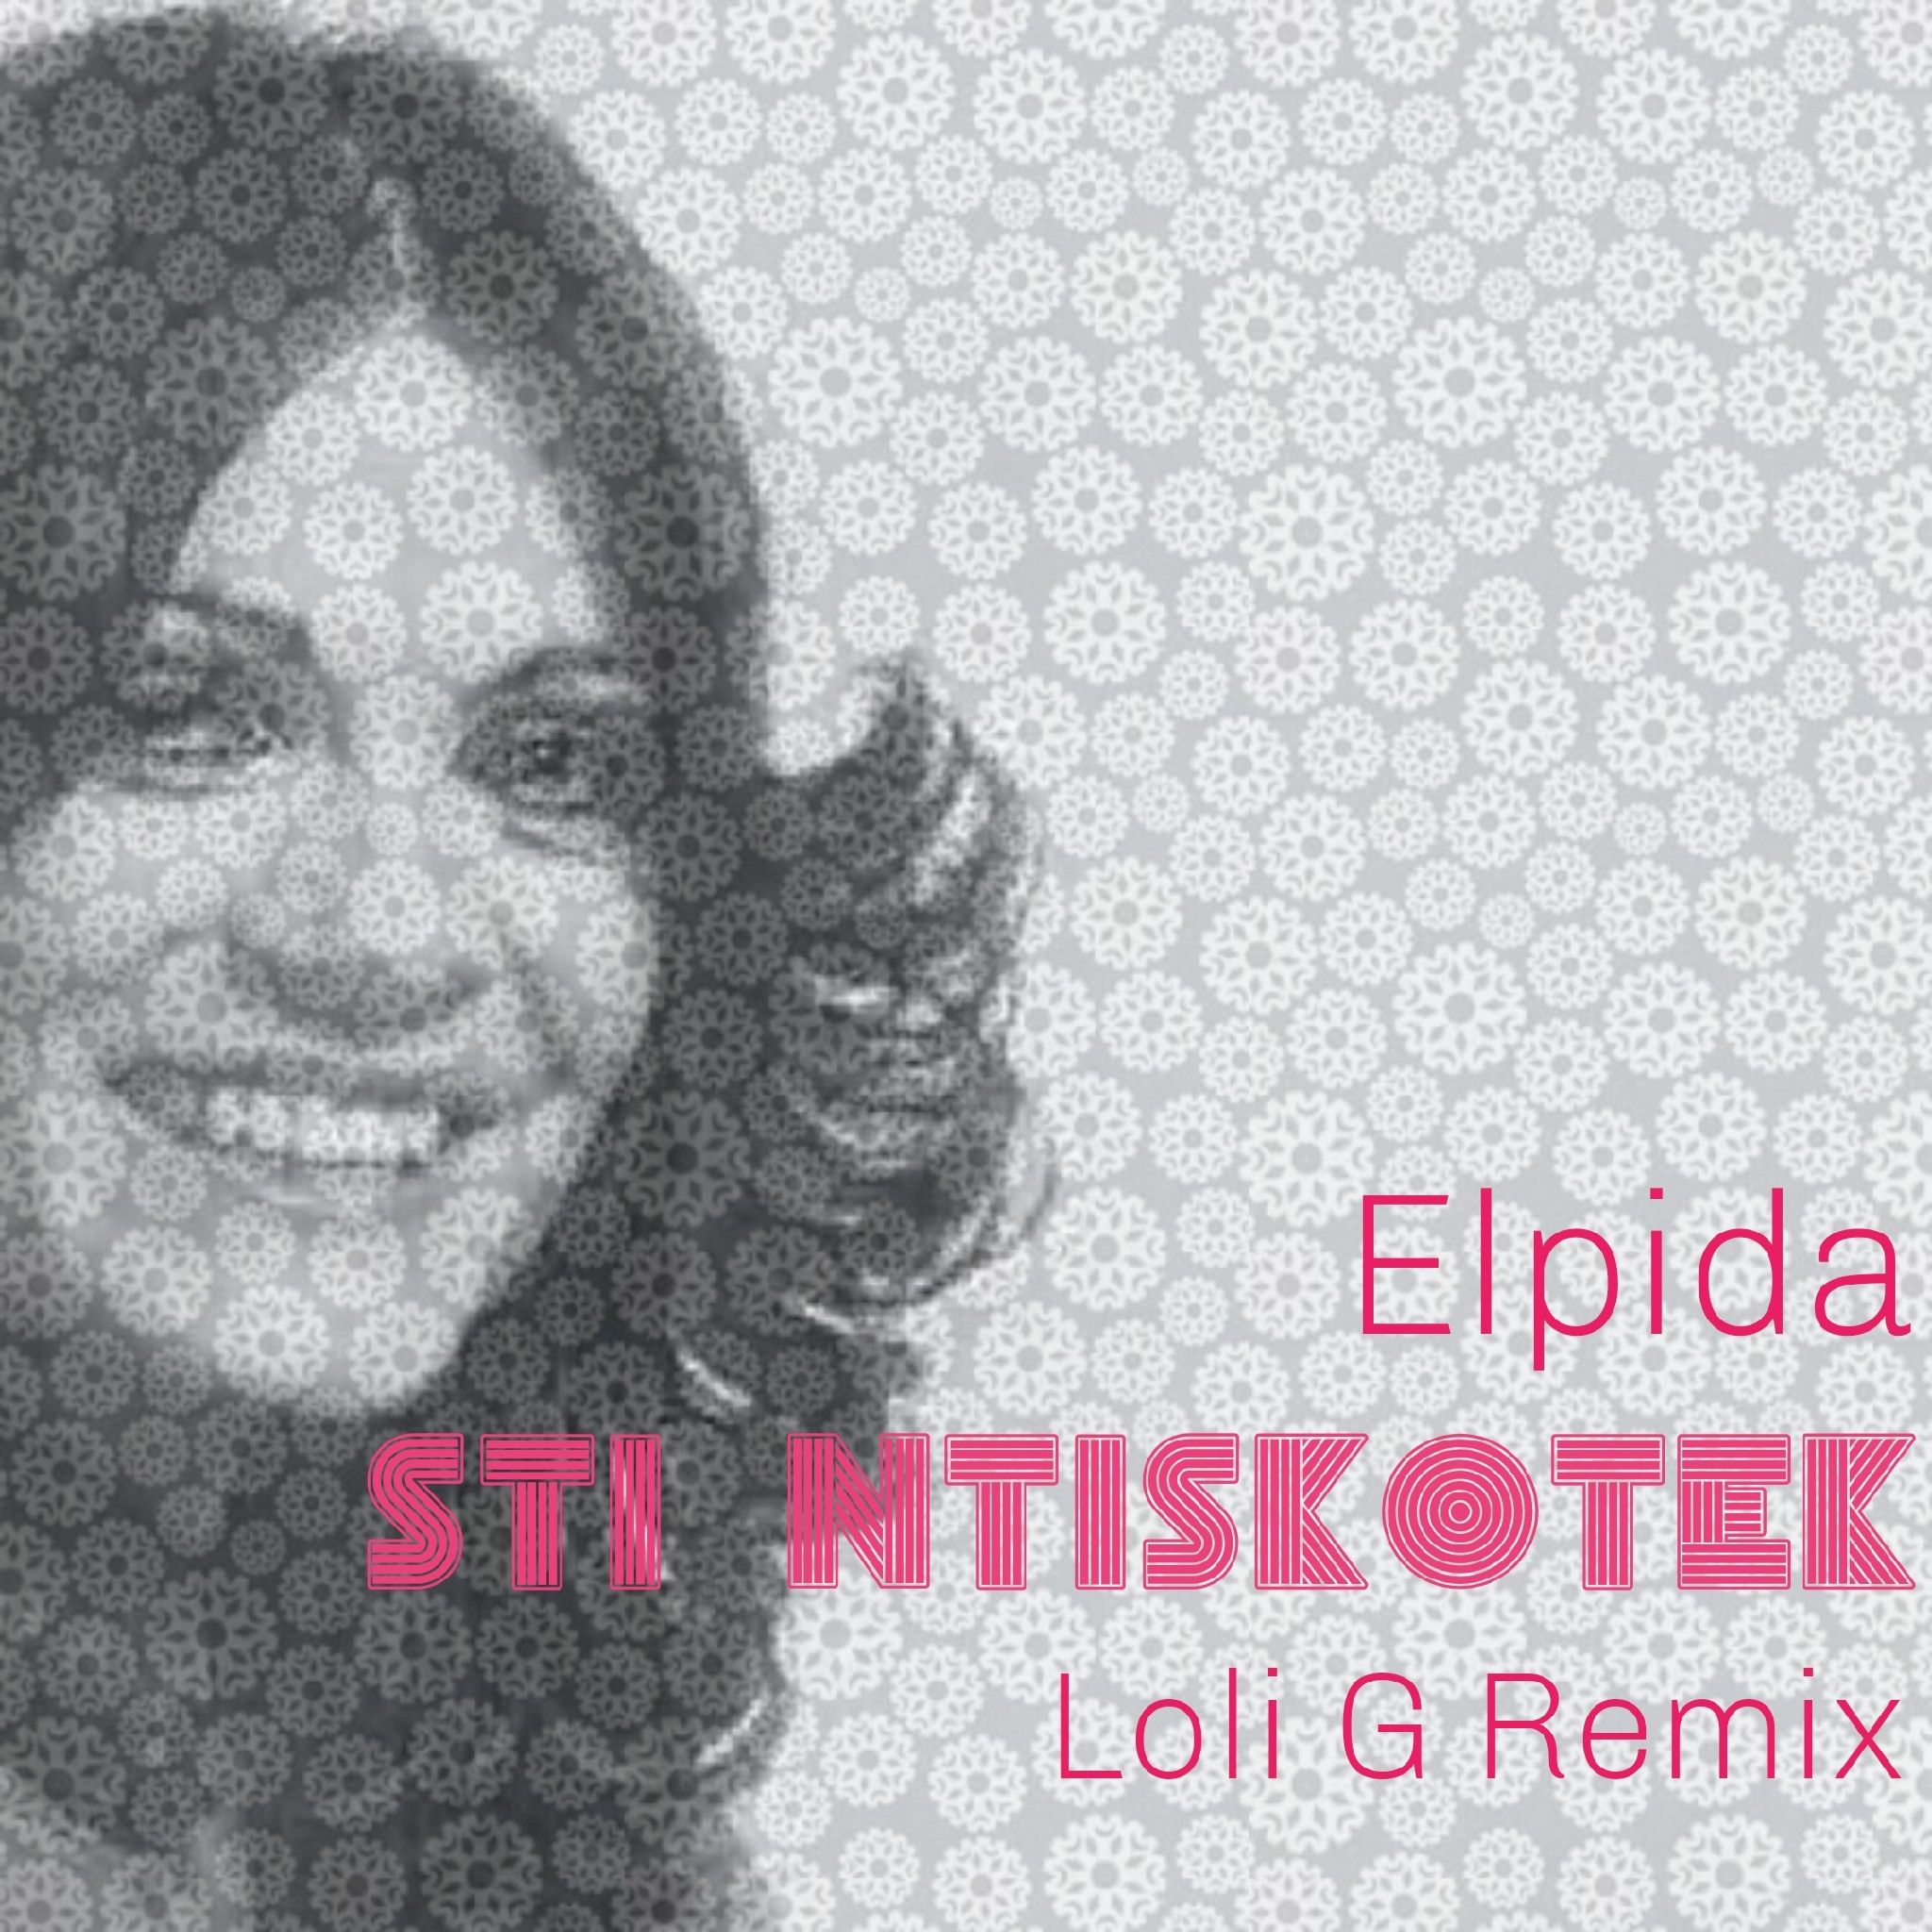 Elpida - Sti Ntiskotek (Loli G Remix)